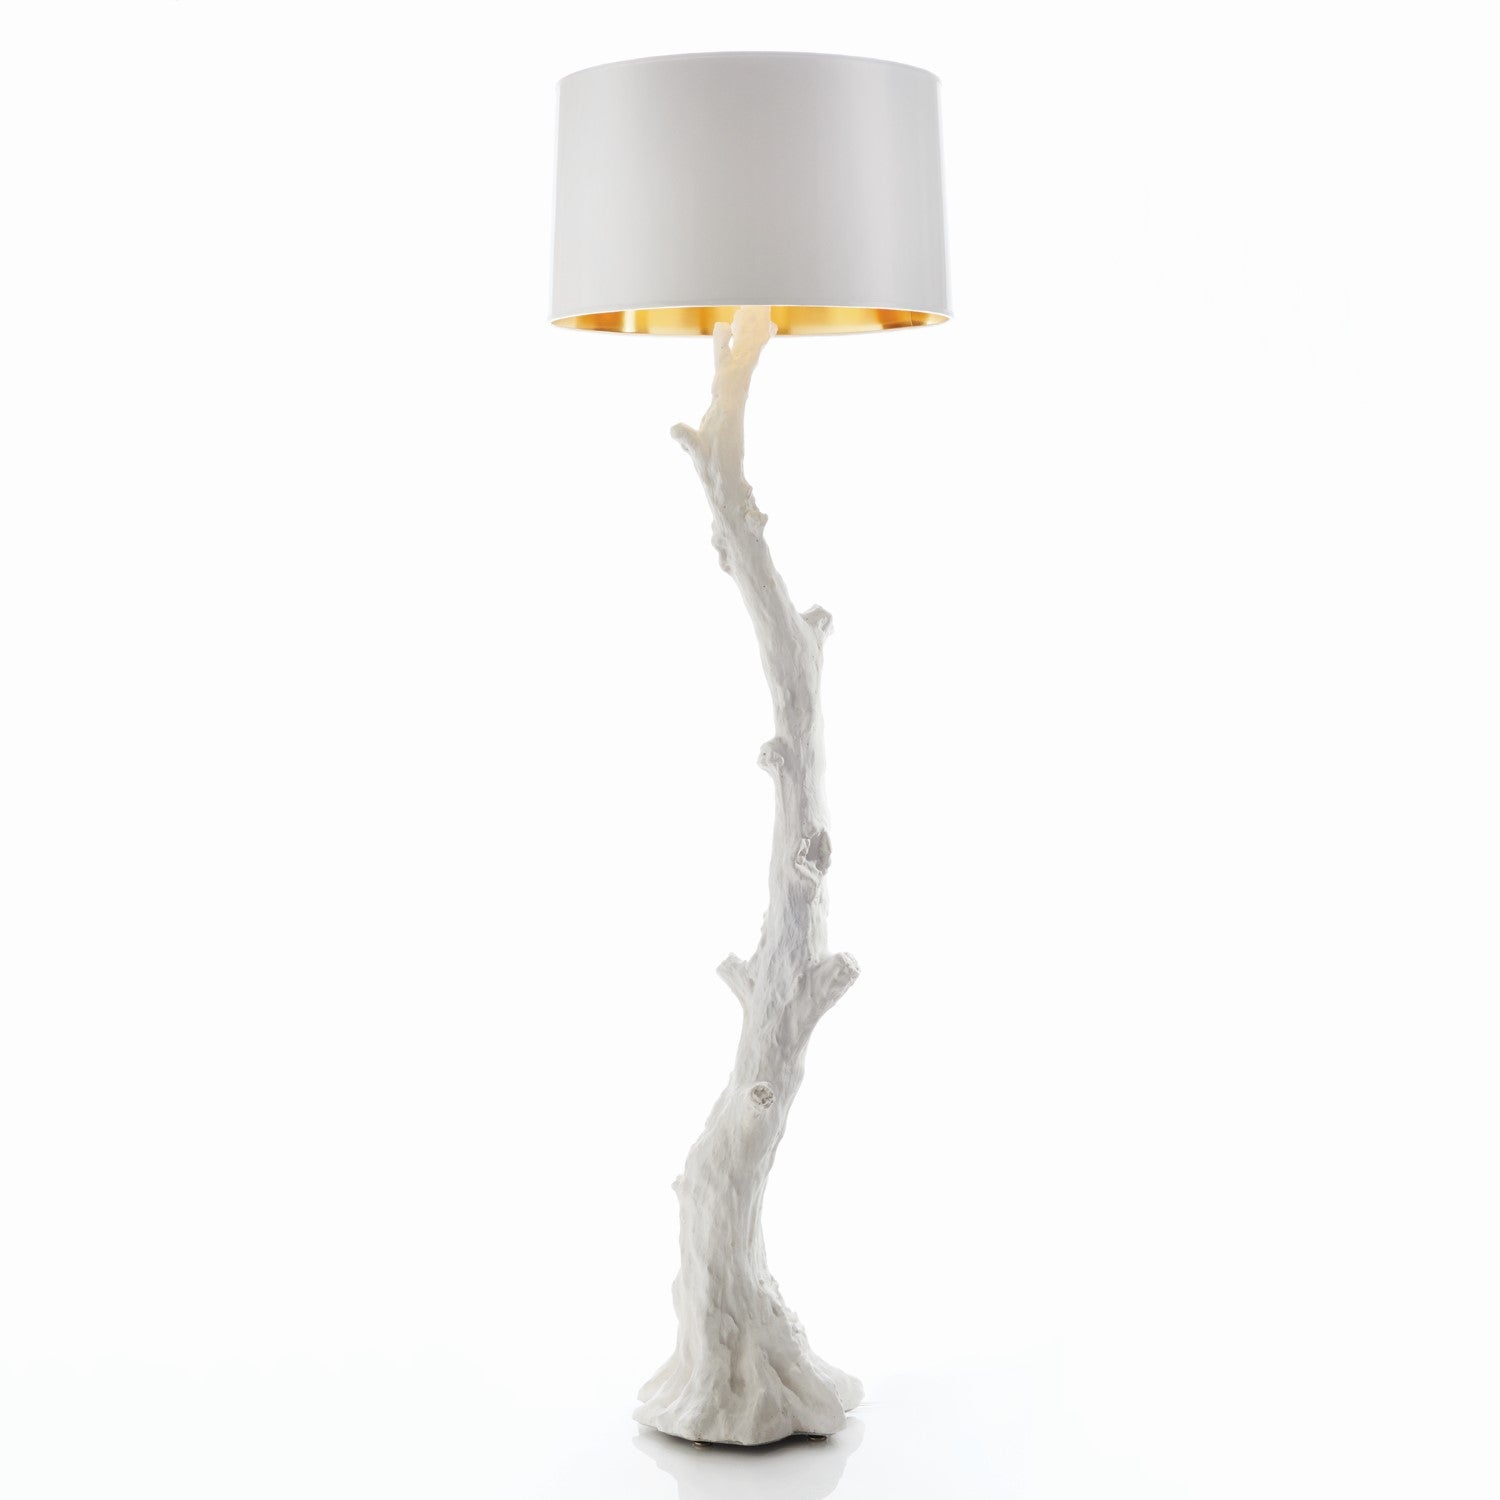 Faux Bois Floor Lamp - White - Grats Decor Interior Design & Build Inc.